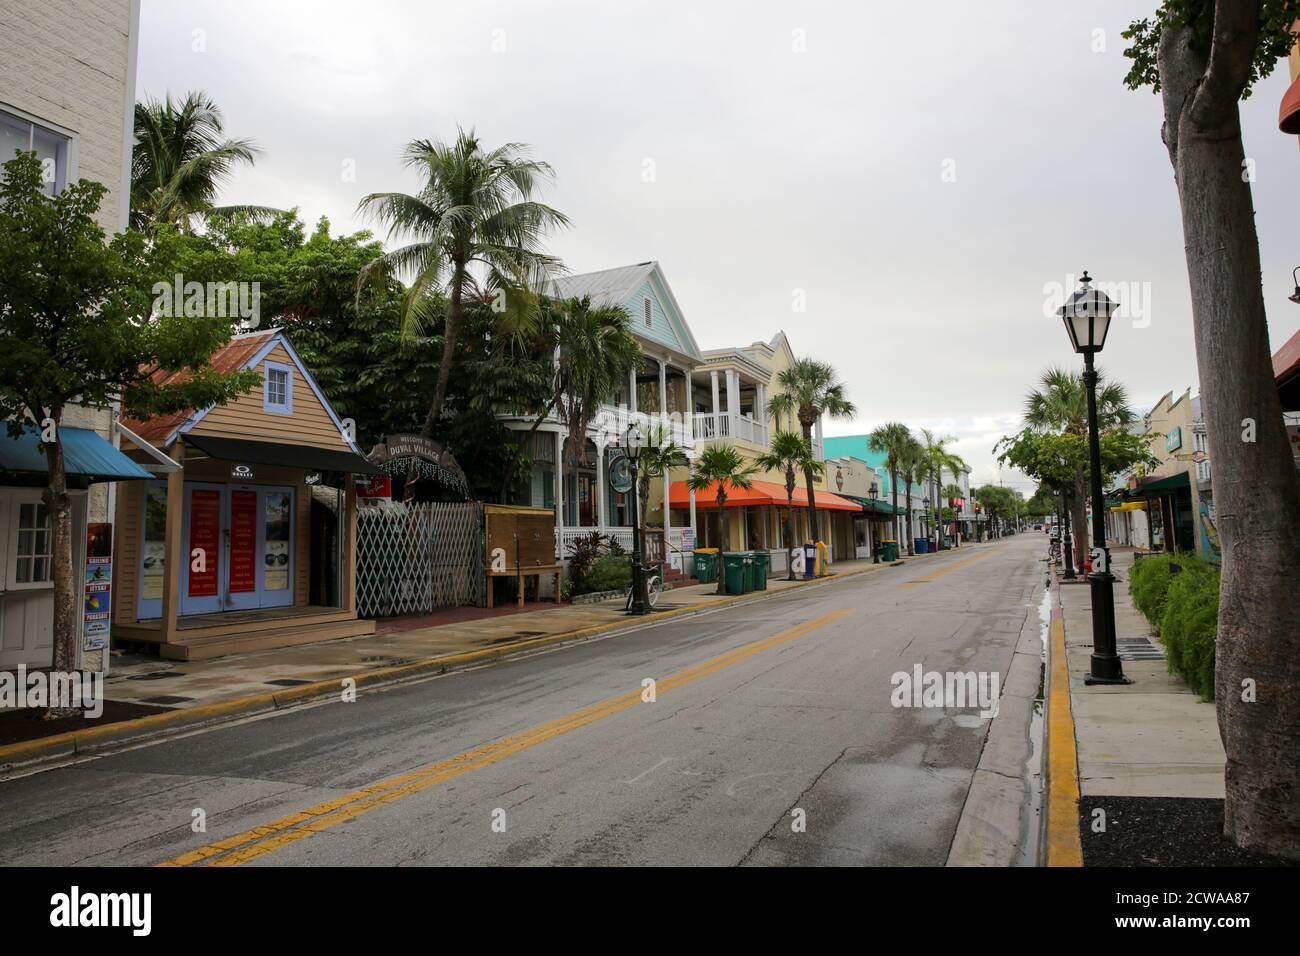 Architecture at Key West Florida, Stock Photo